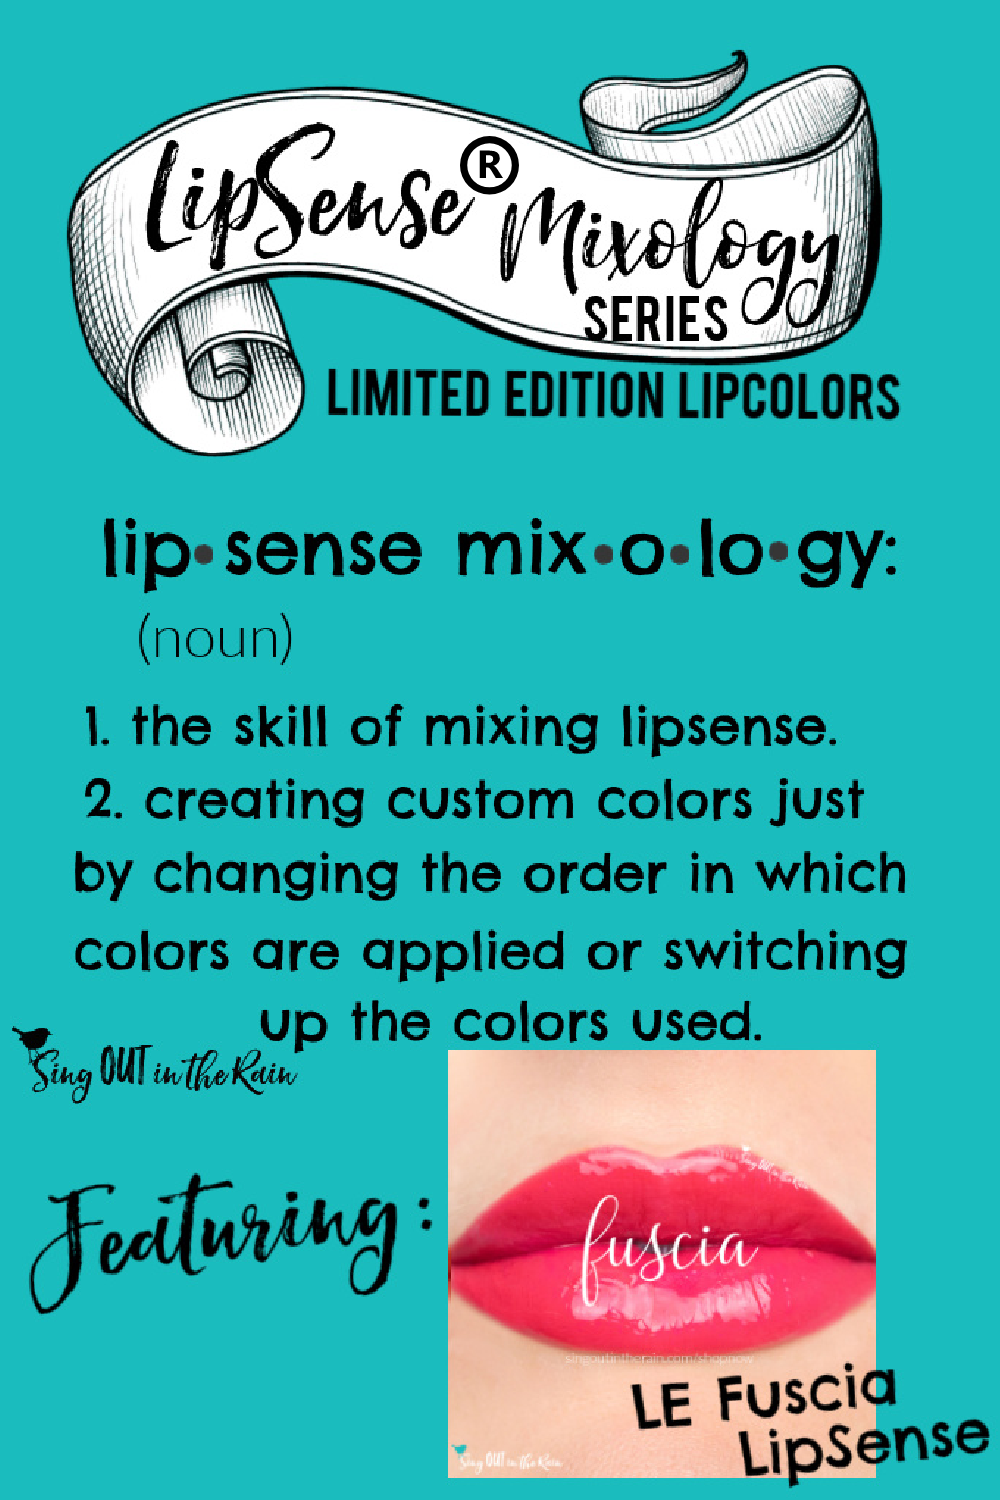 The Ultimate Guide to Fuscia LipSense Mixology